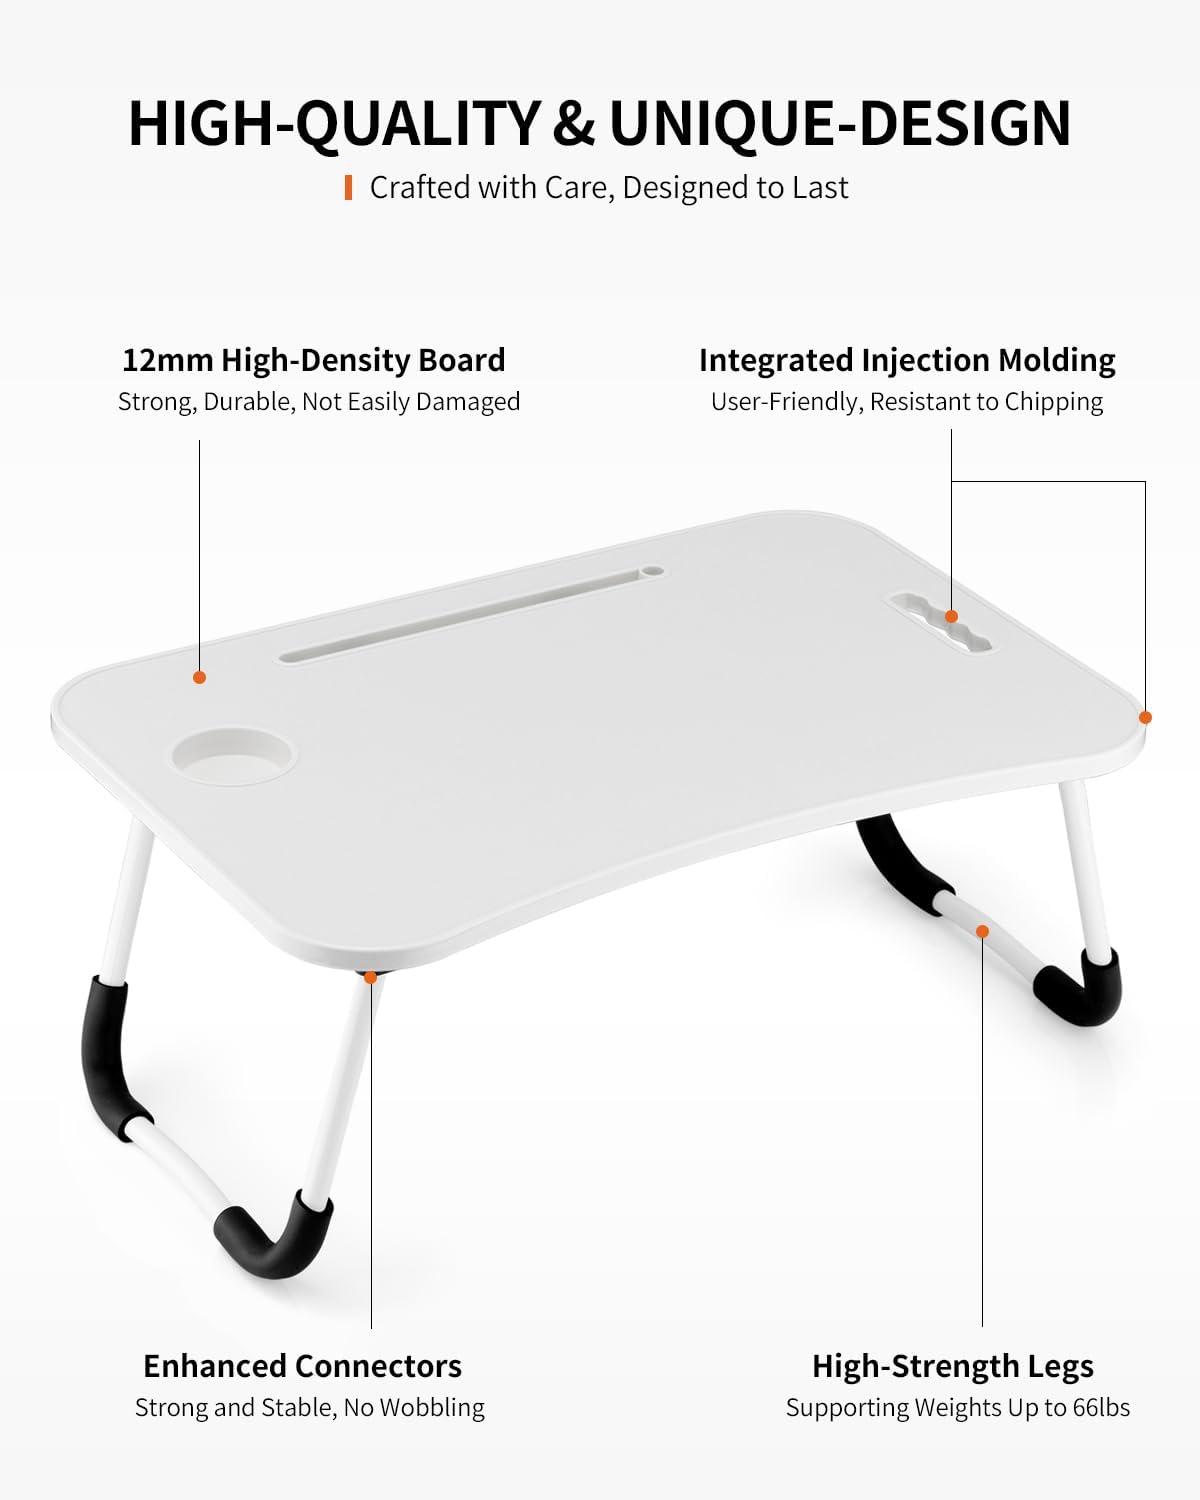 Whiteboard Foldable Laptop Desk